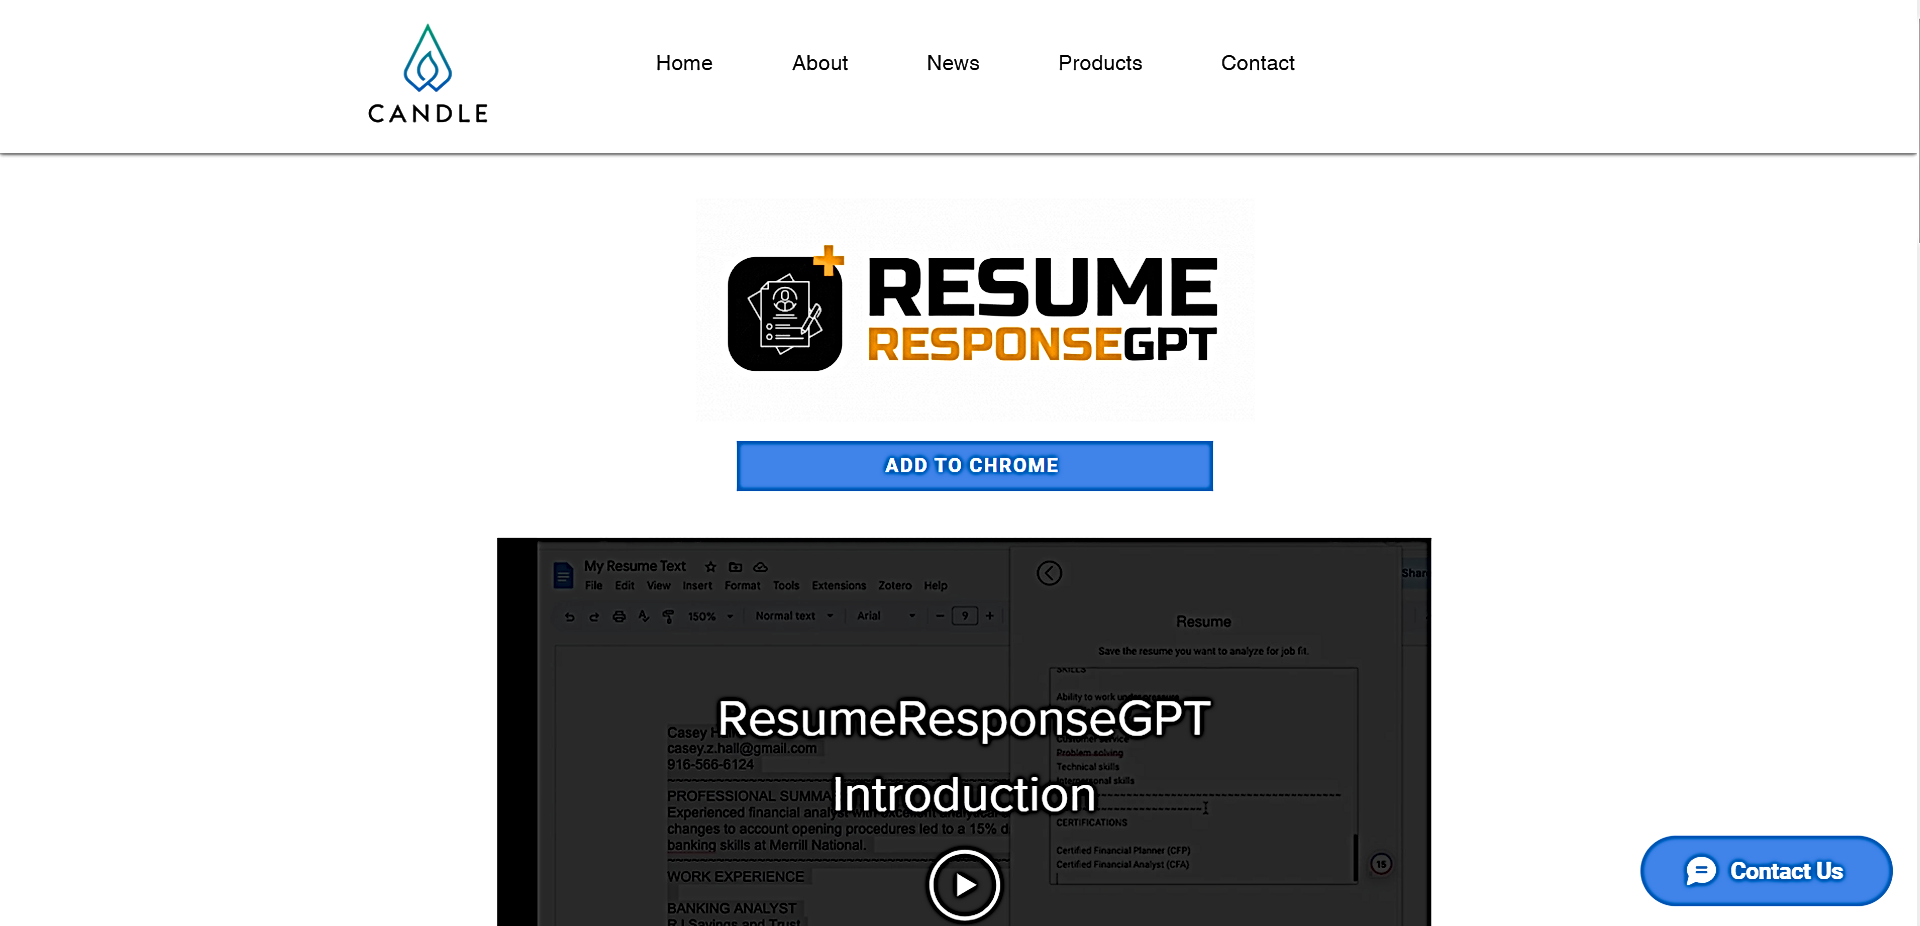 ResumeResponseGPT featured